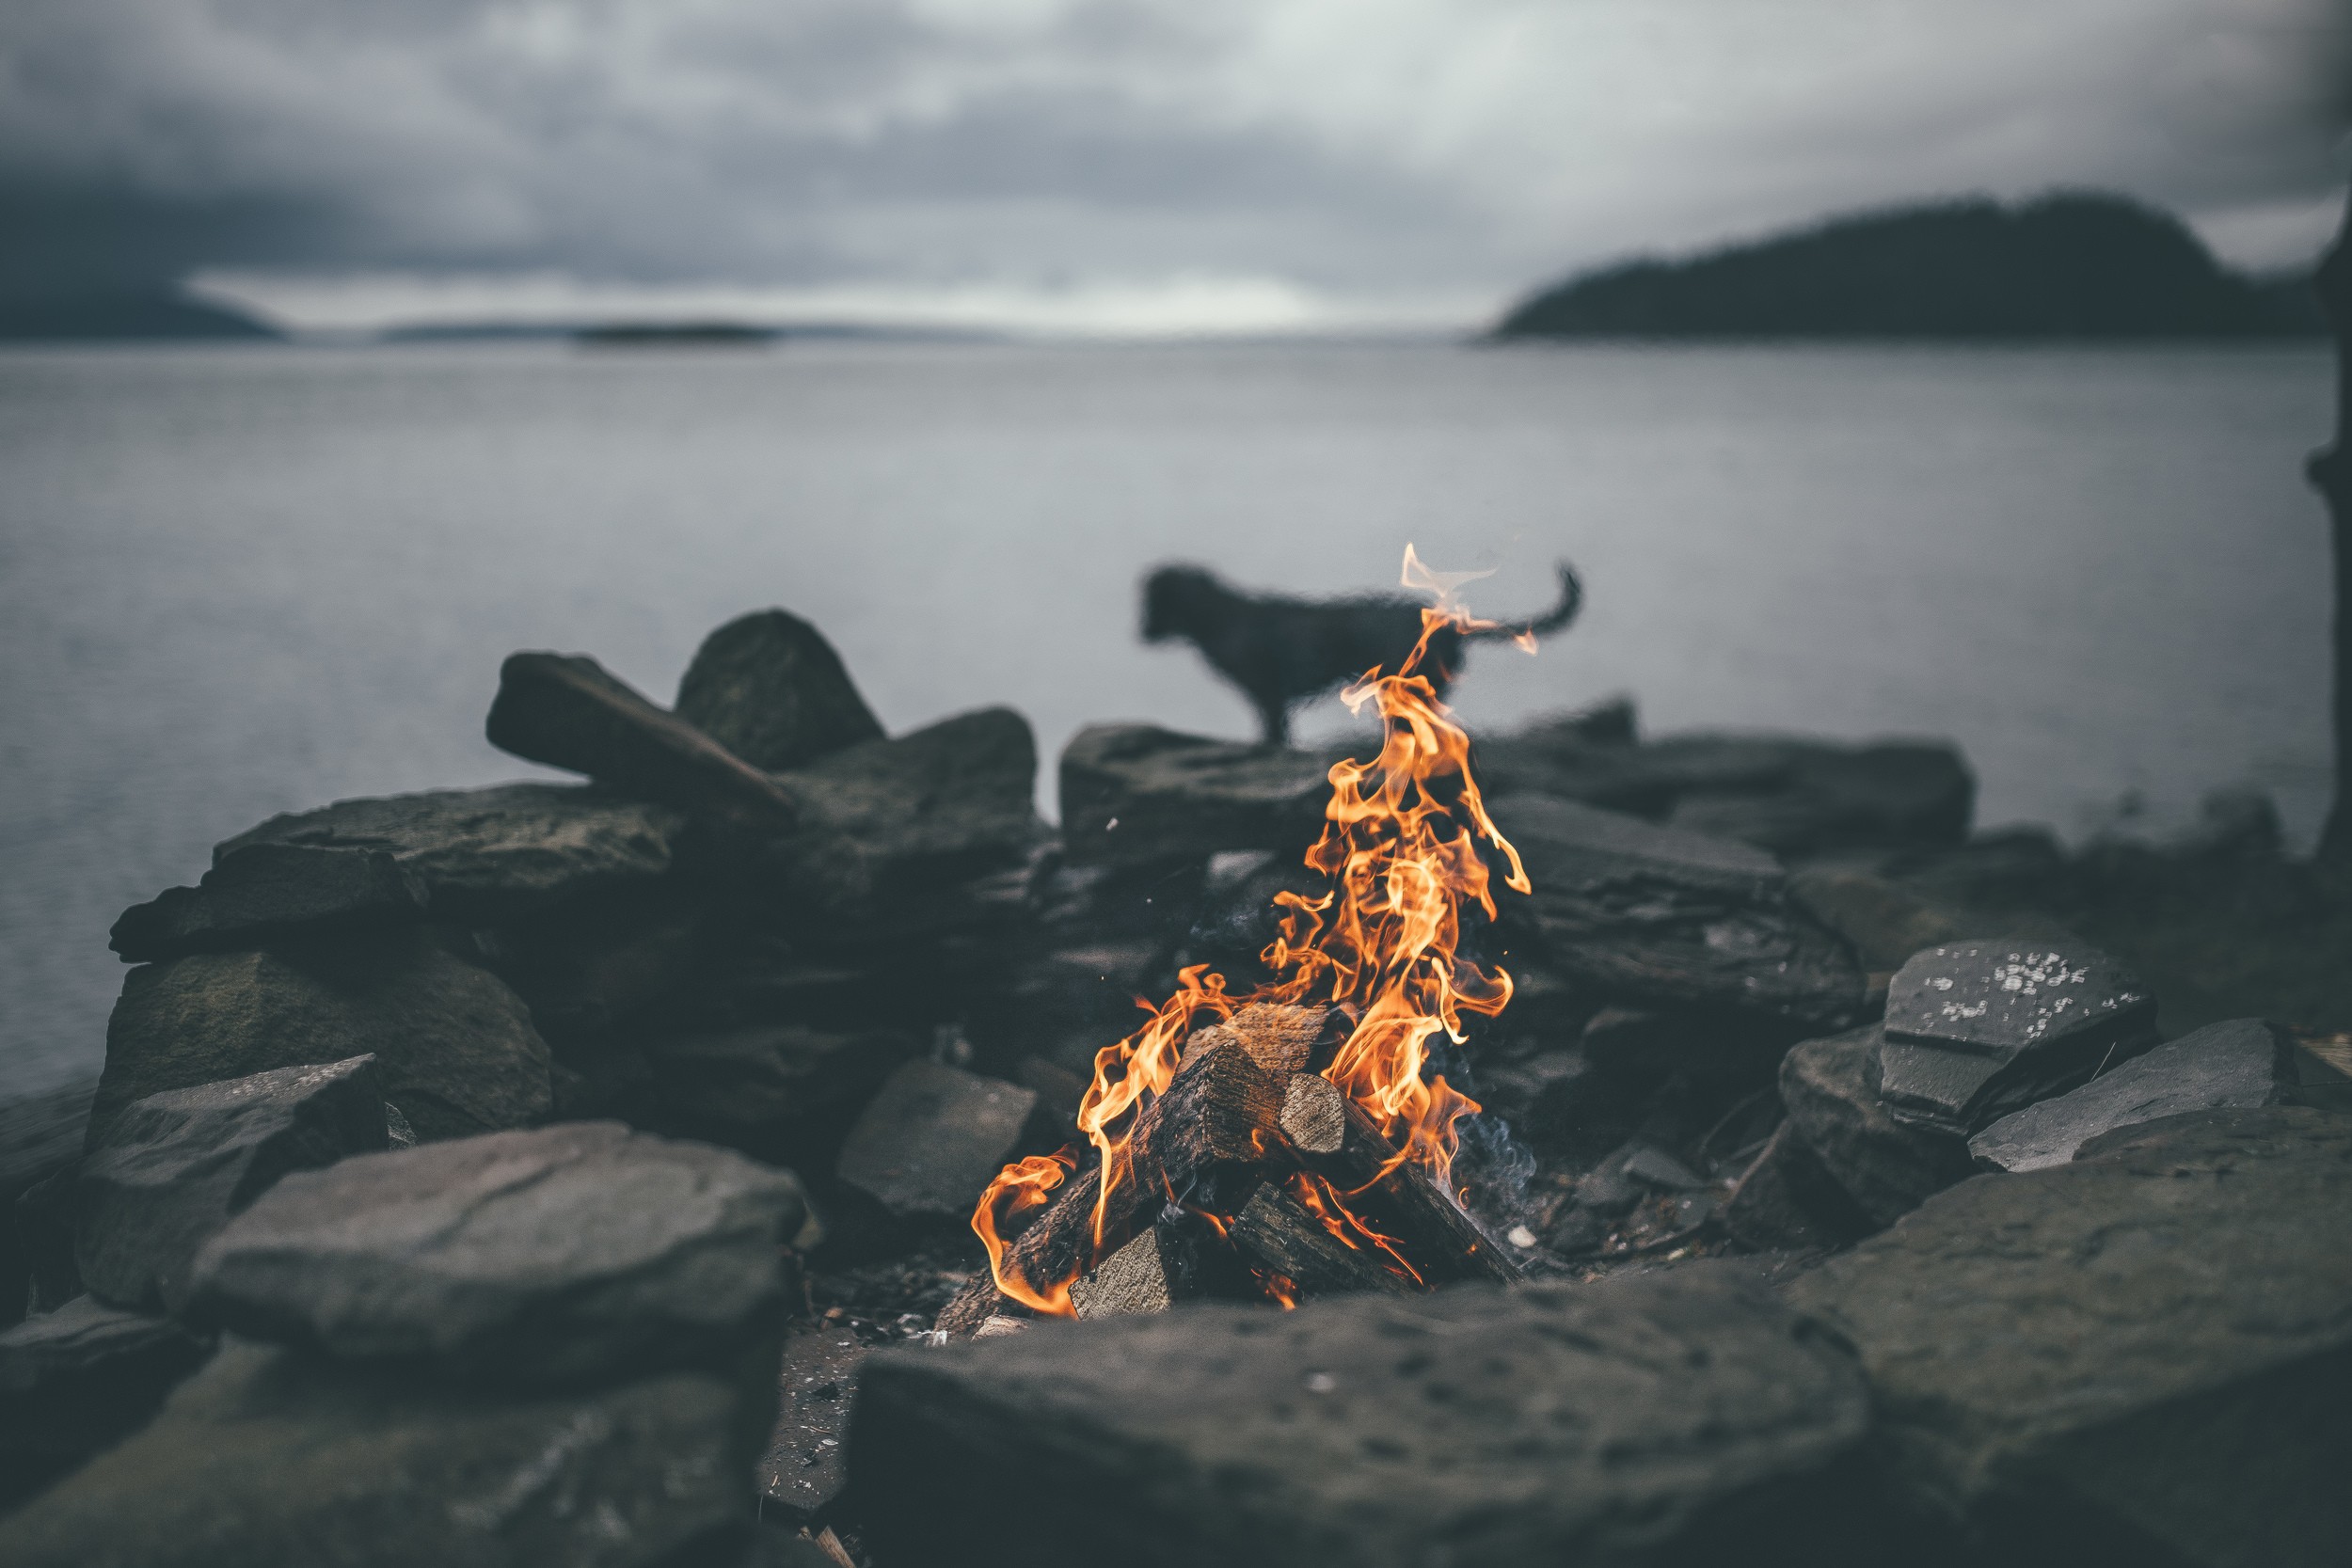 General 2500x1667 nature fire bonfires dog sea rocks sky water landscape firewood wood depth of field silhouette